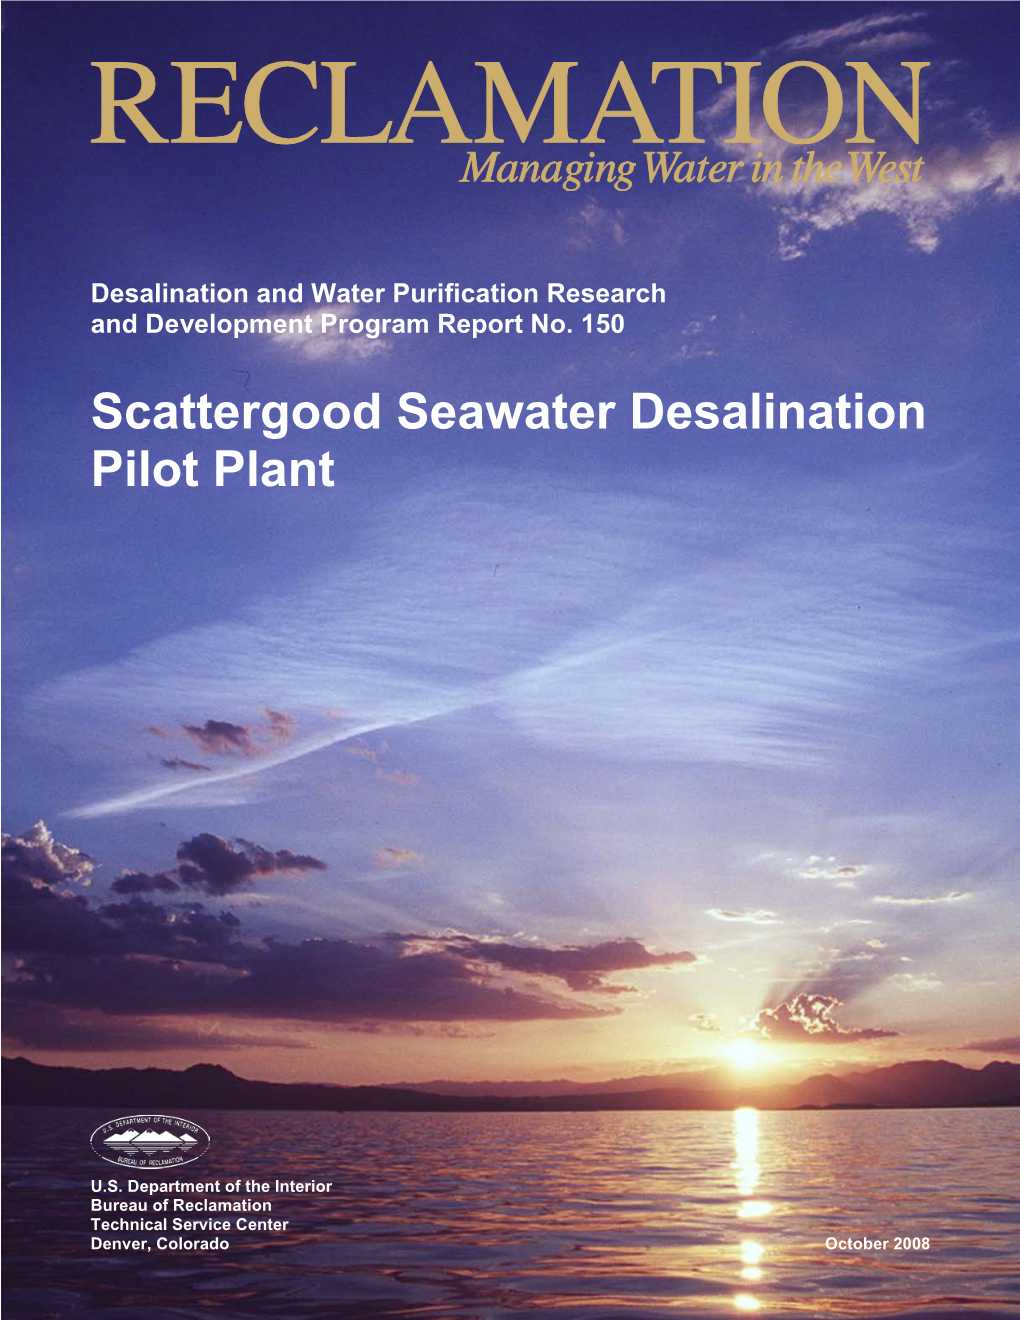 Scattergood Seawater Desalination Pilot Plant